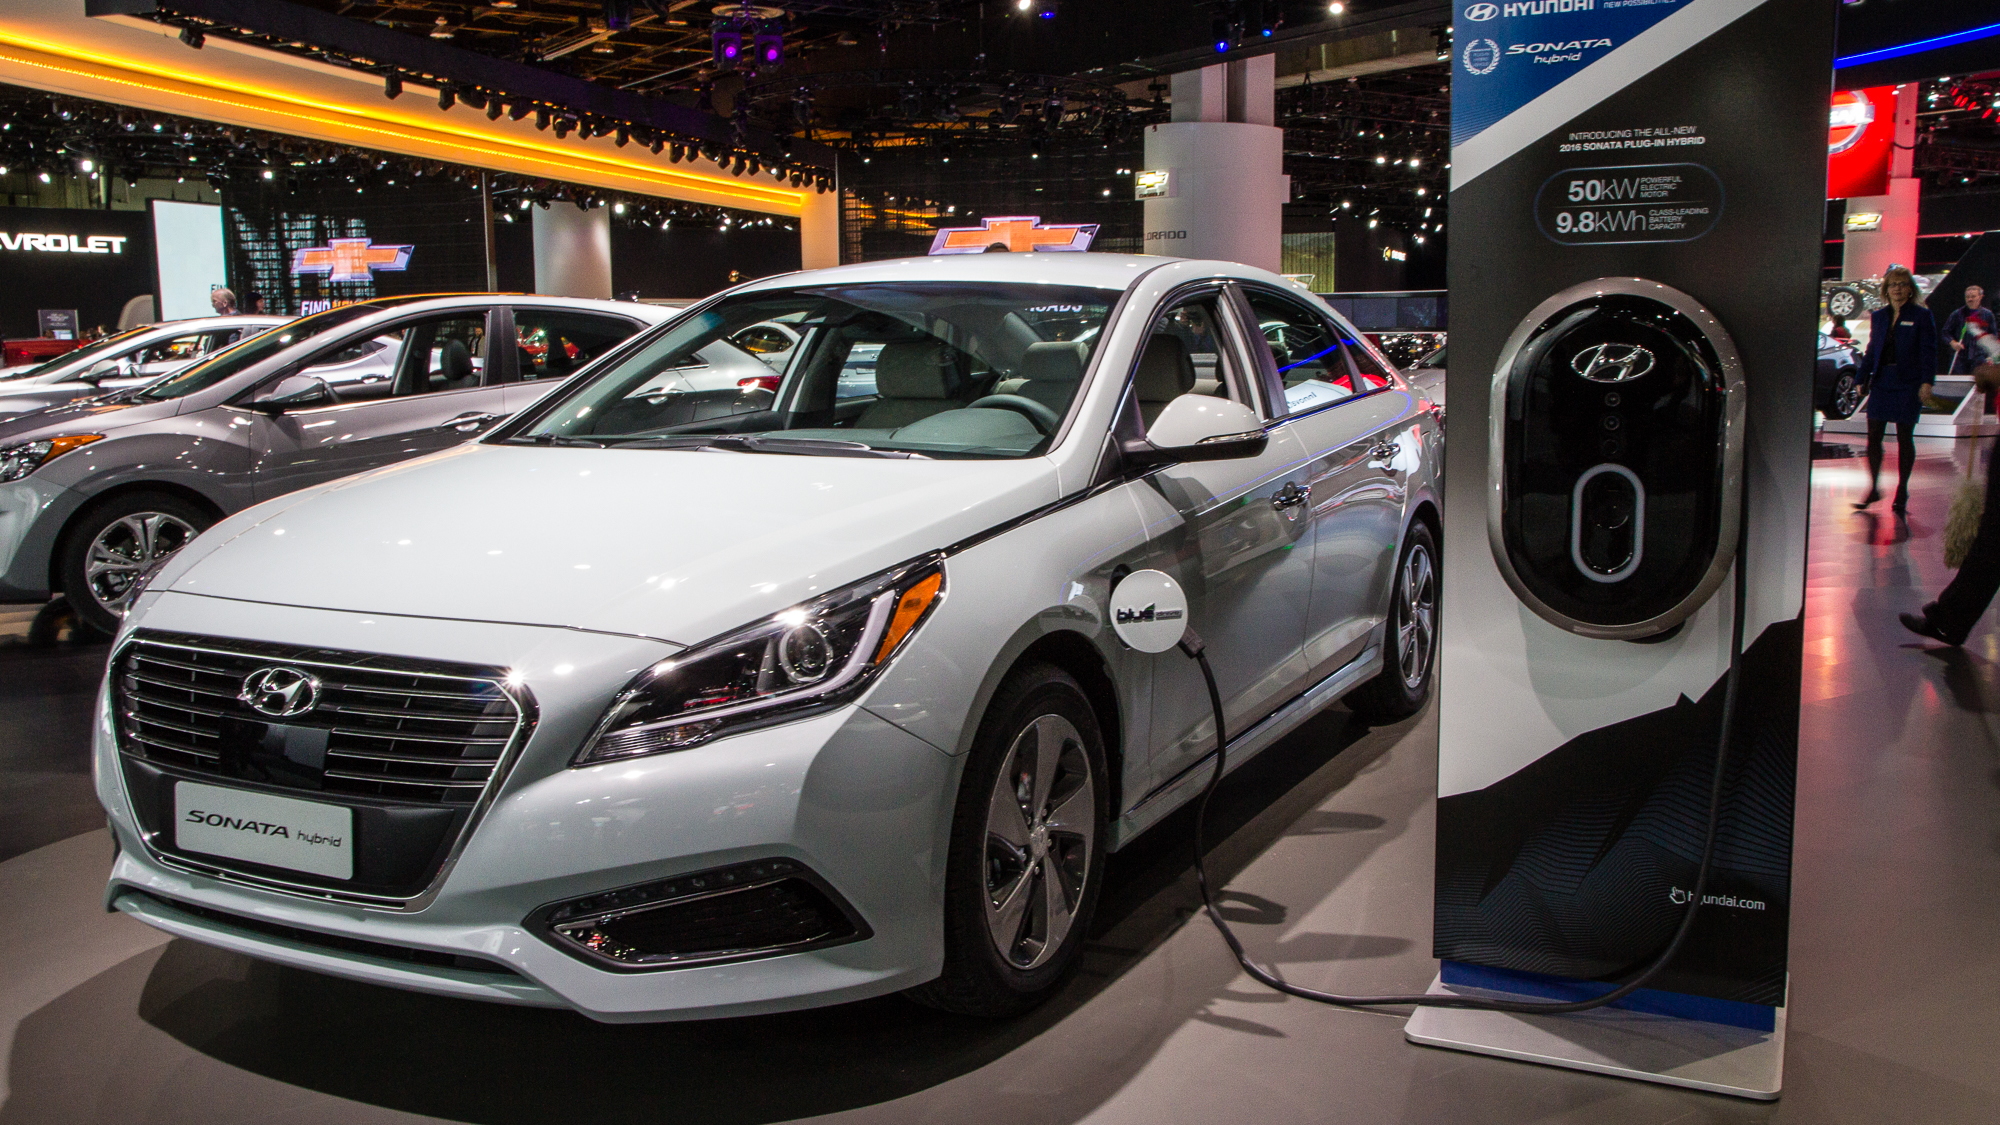 2016 Hyundai Sonata Plug-In Hybrid live photos, 2015 Detroit Auto Show